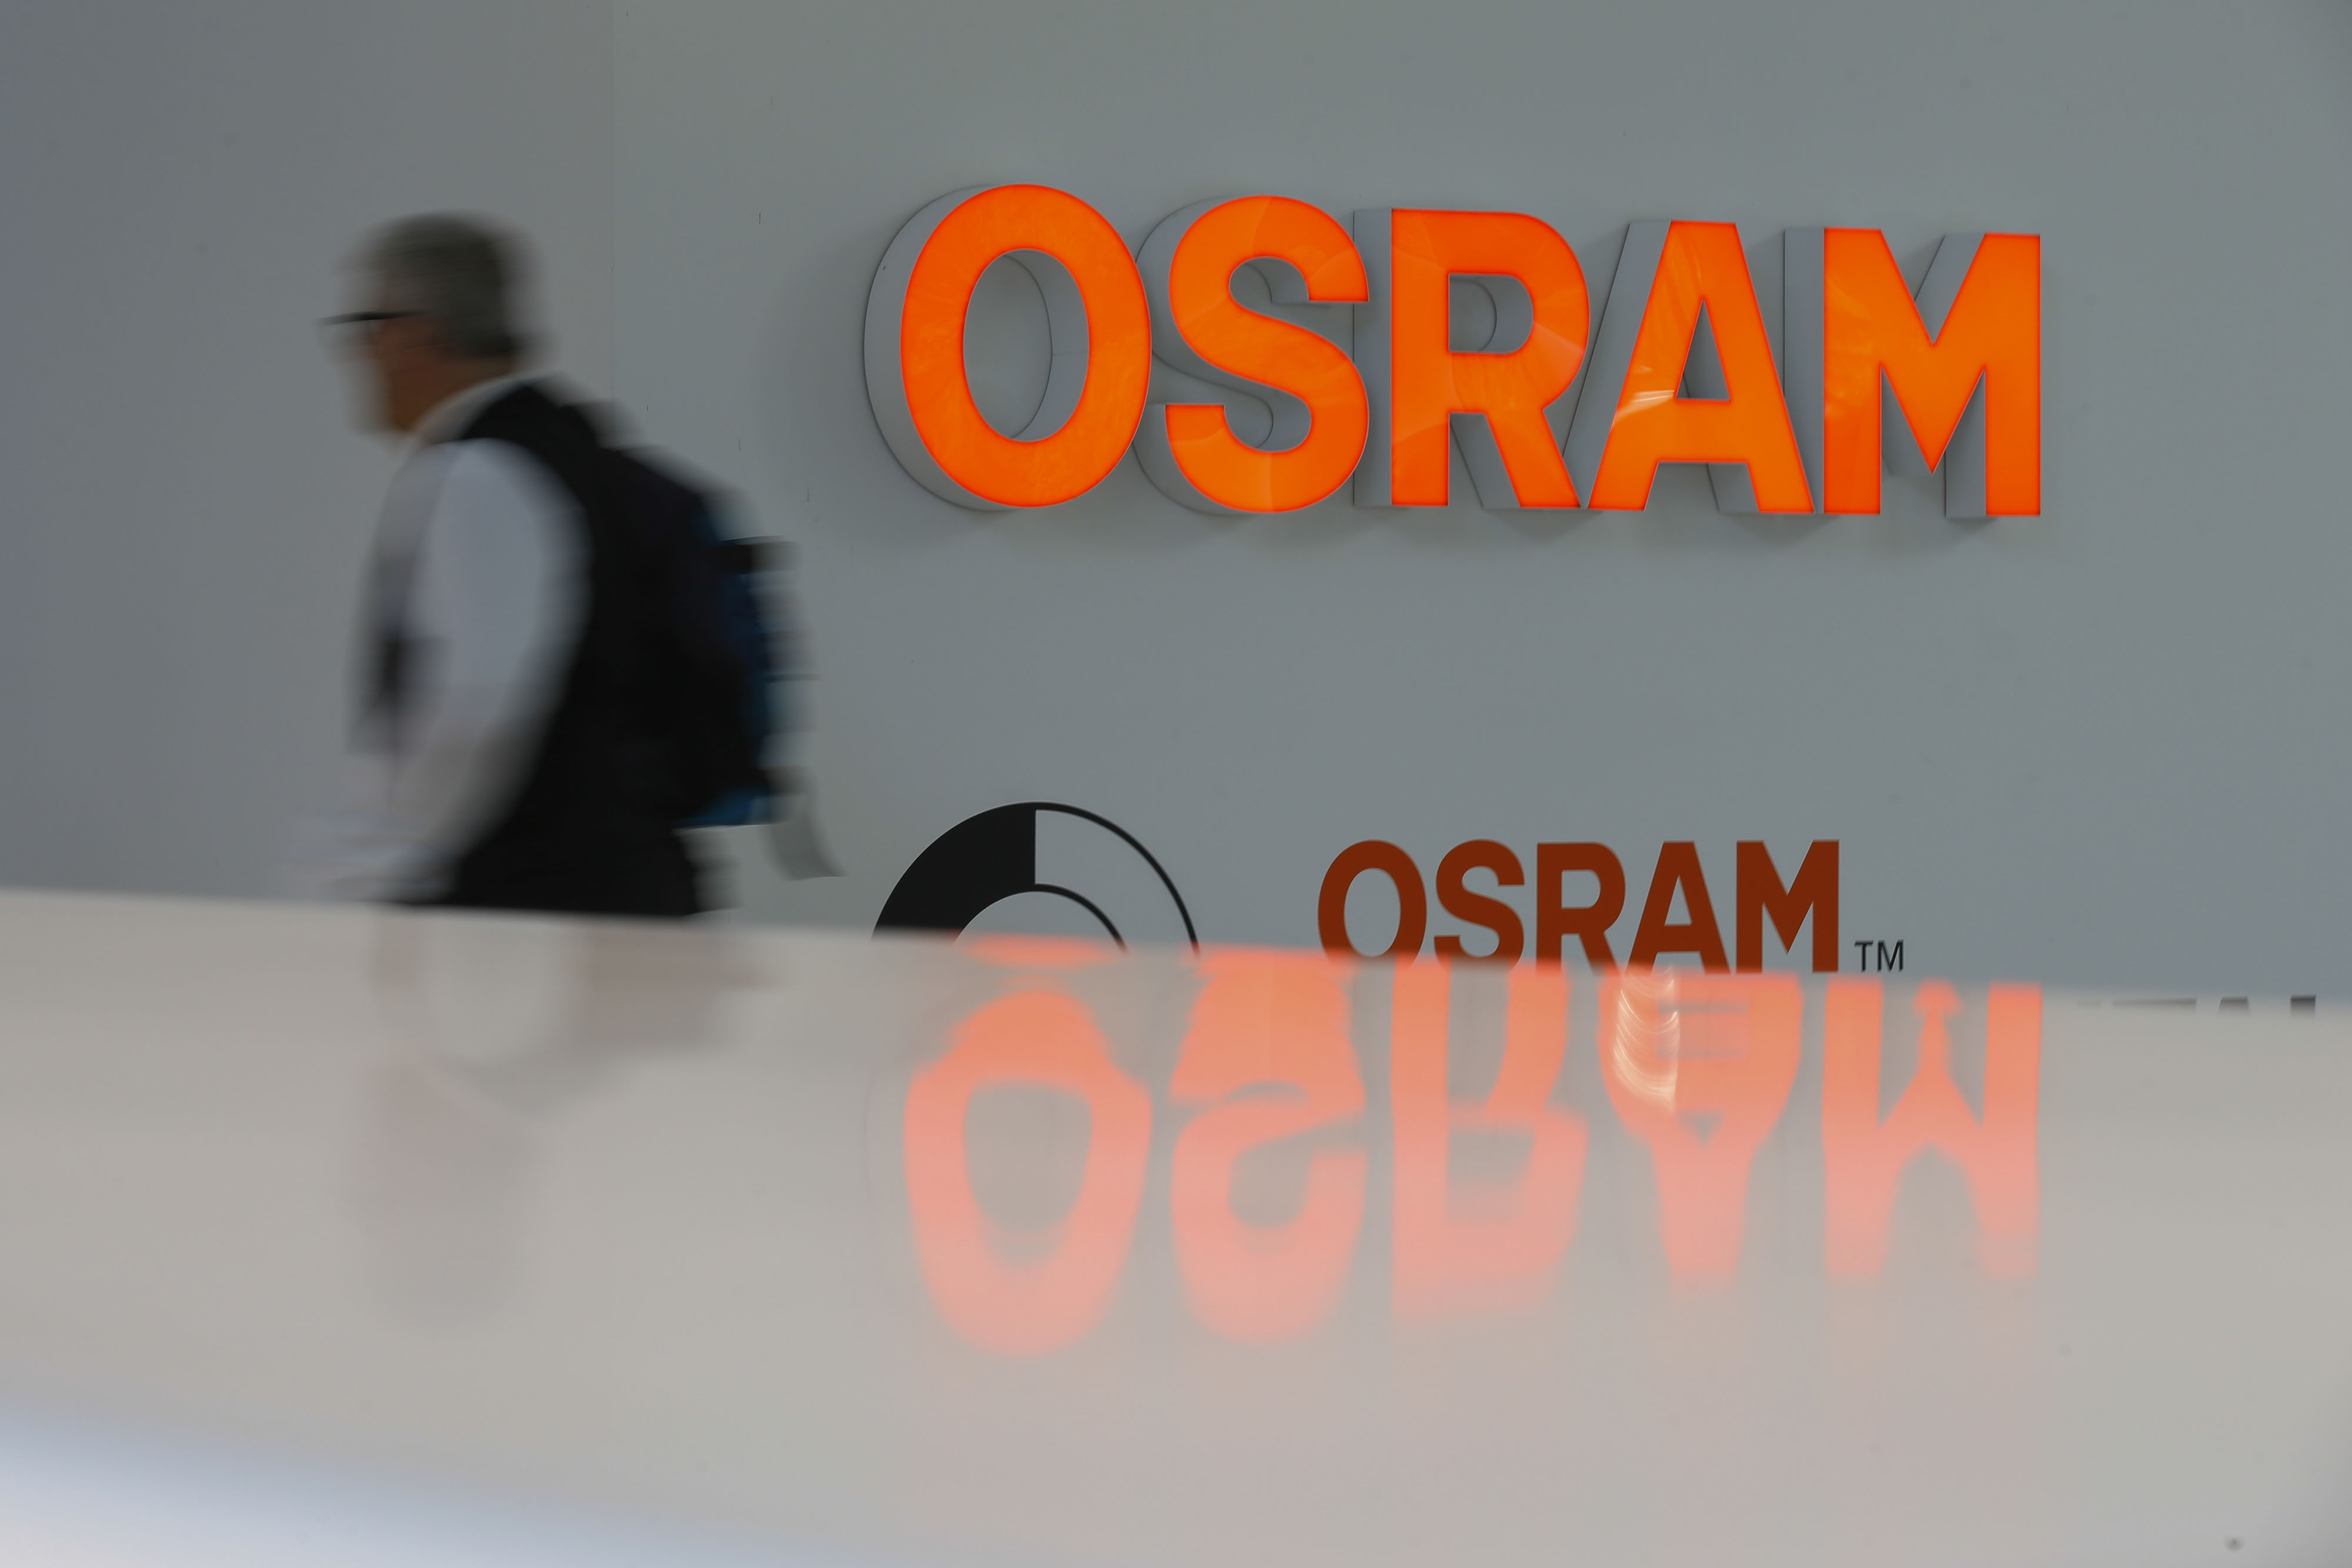 ams OSRAM, Authorised Distributor in EMEA